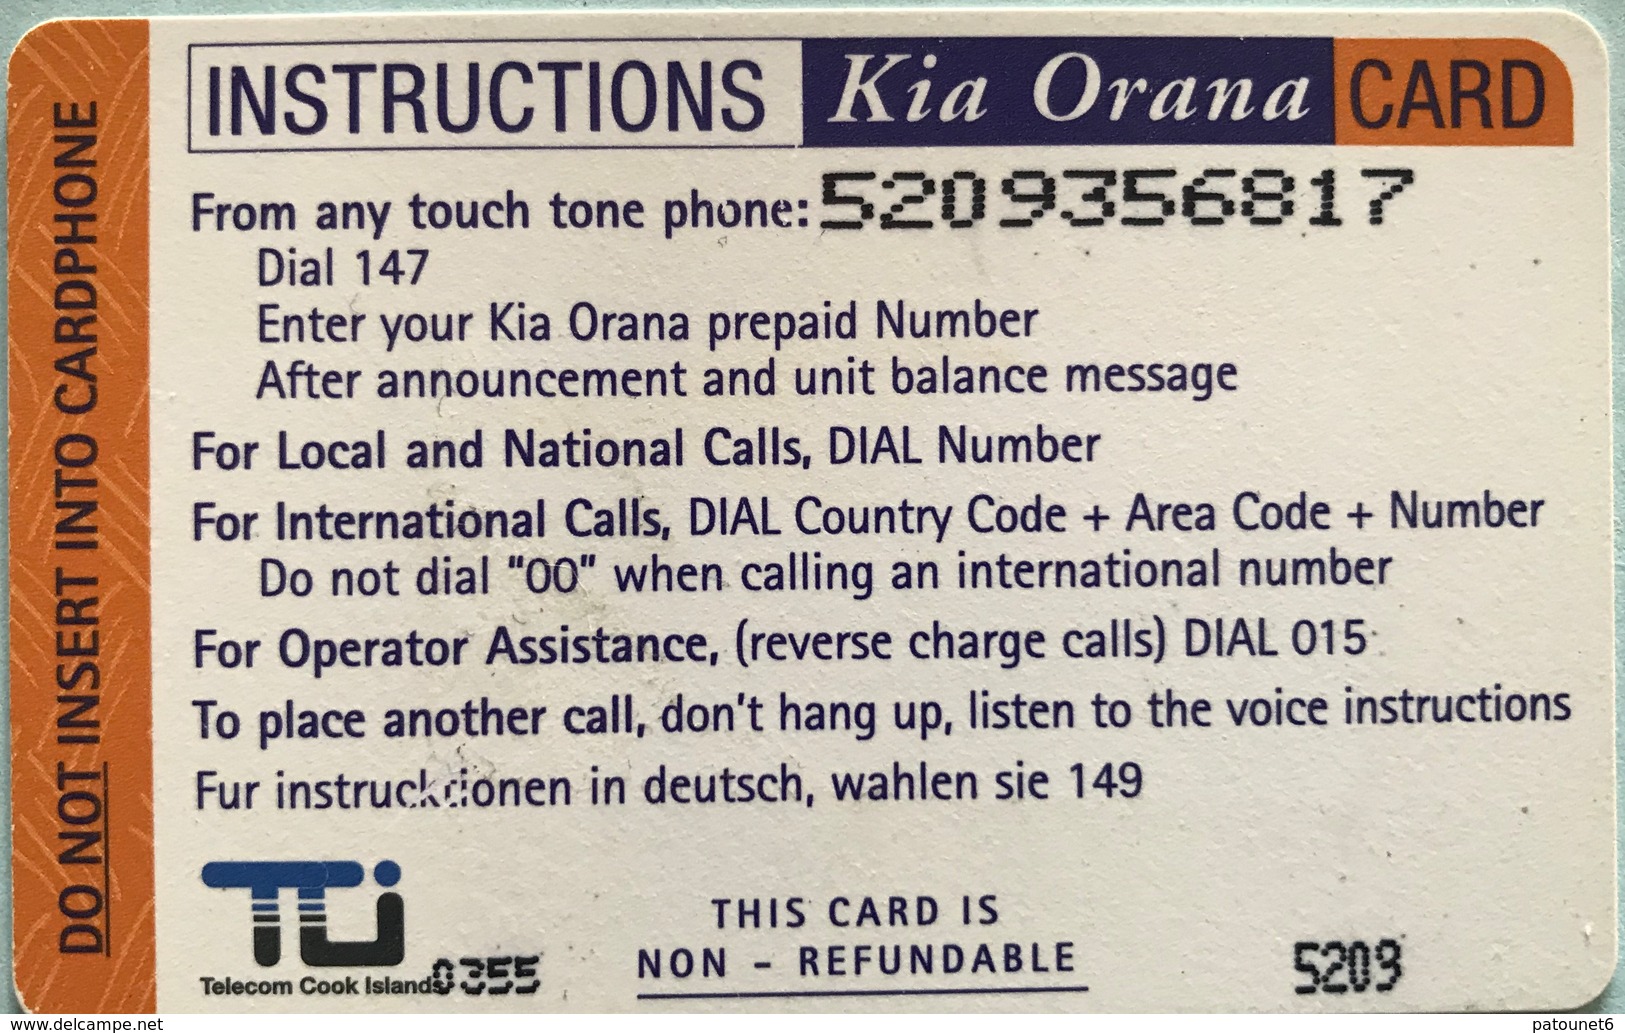 ILES COOK  -  Phonecard  -  " Flower " -  $50  -  Kia Orana CARD  -  TCI - Cookeilanden